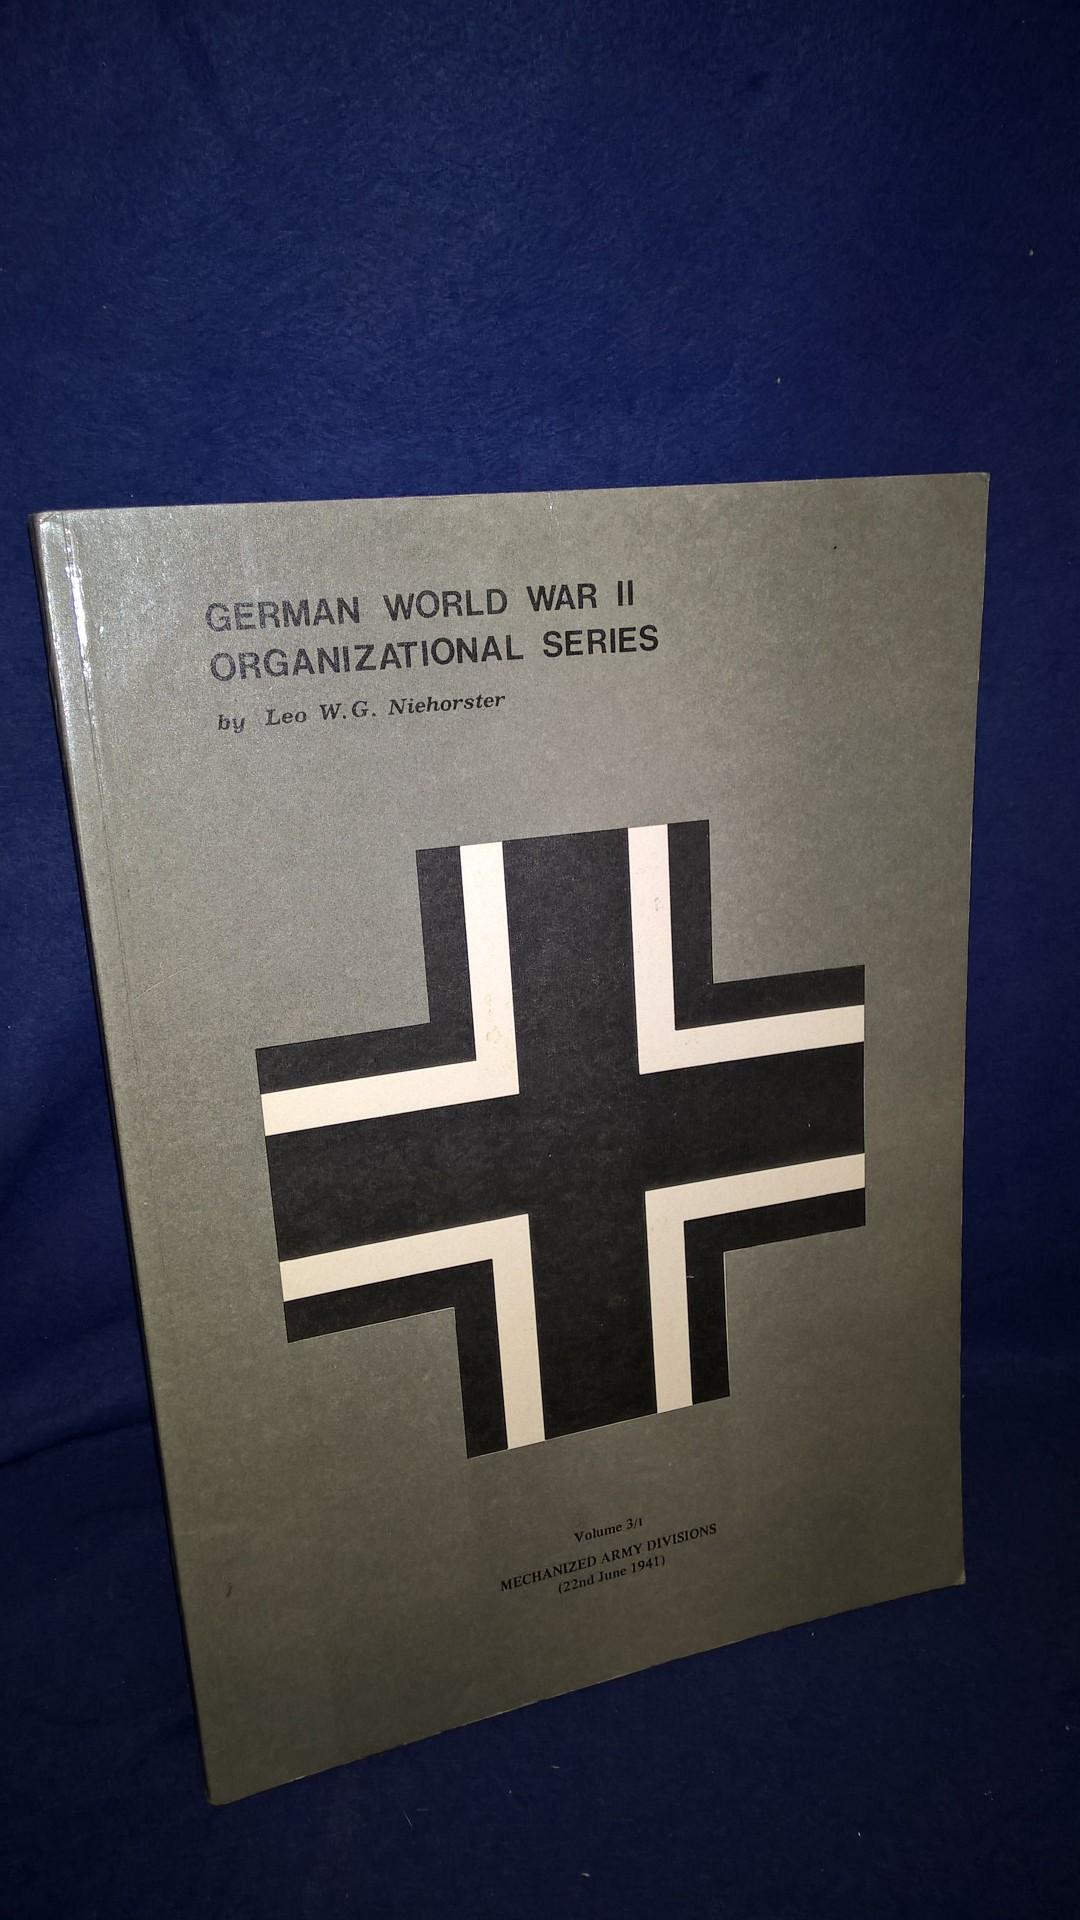 GERMAN WORLD WAR II ORGANIZATIONAL SERIES.Volume 3/I Mechanized Army Divisions 22nd June 1941.